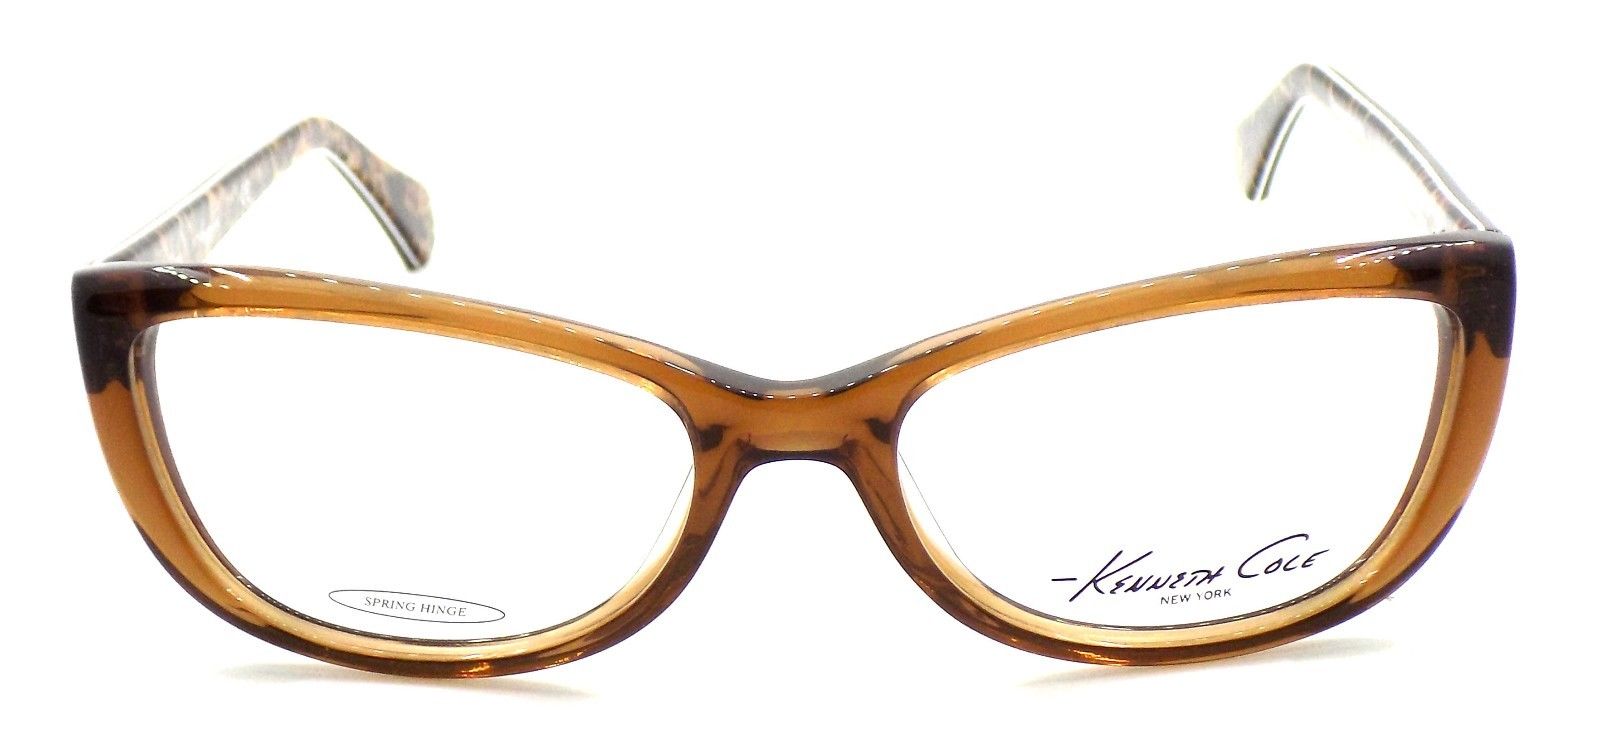 2-Kenneth Cole NY KC211 048 Women's Eyeglasses Frames 53-16-135 Shiny Dark Brown-664689622627-IKSpecs